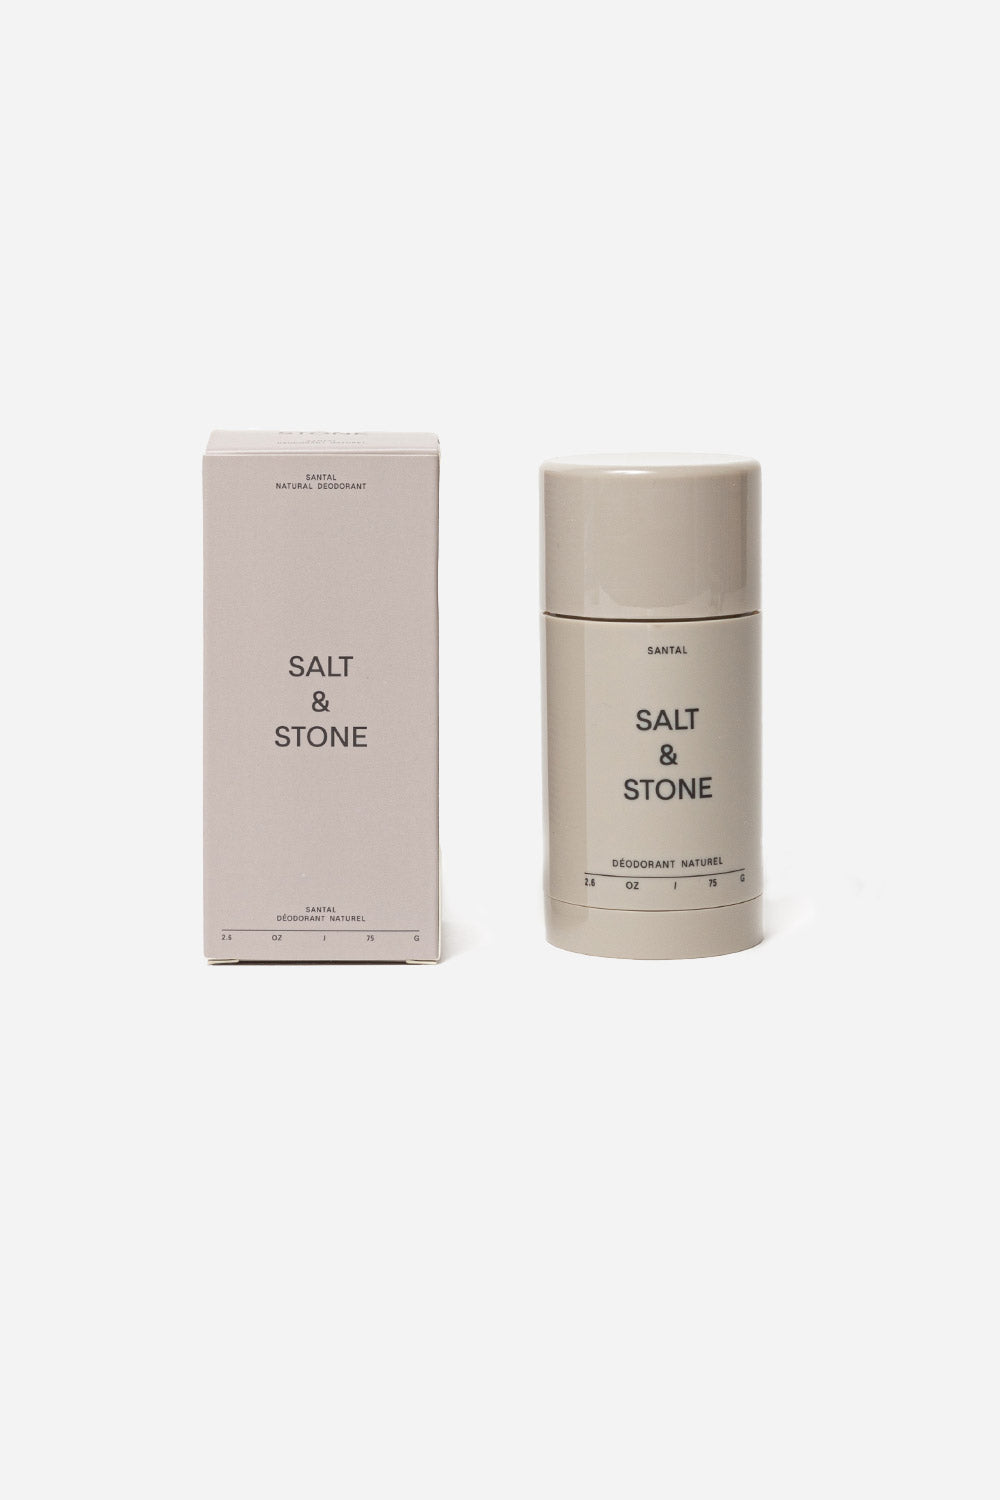 salt-Stone-deodorant-santal